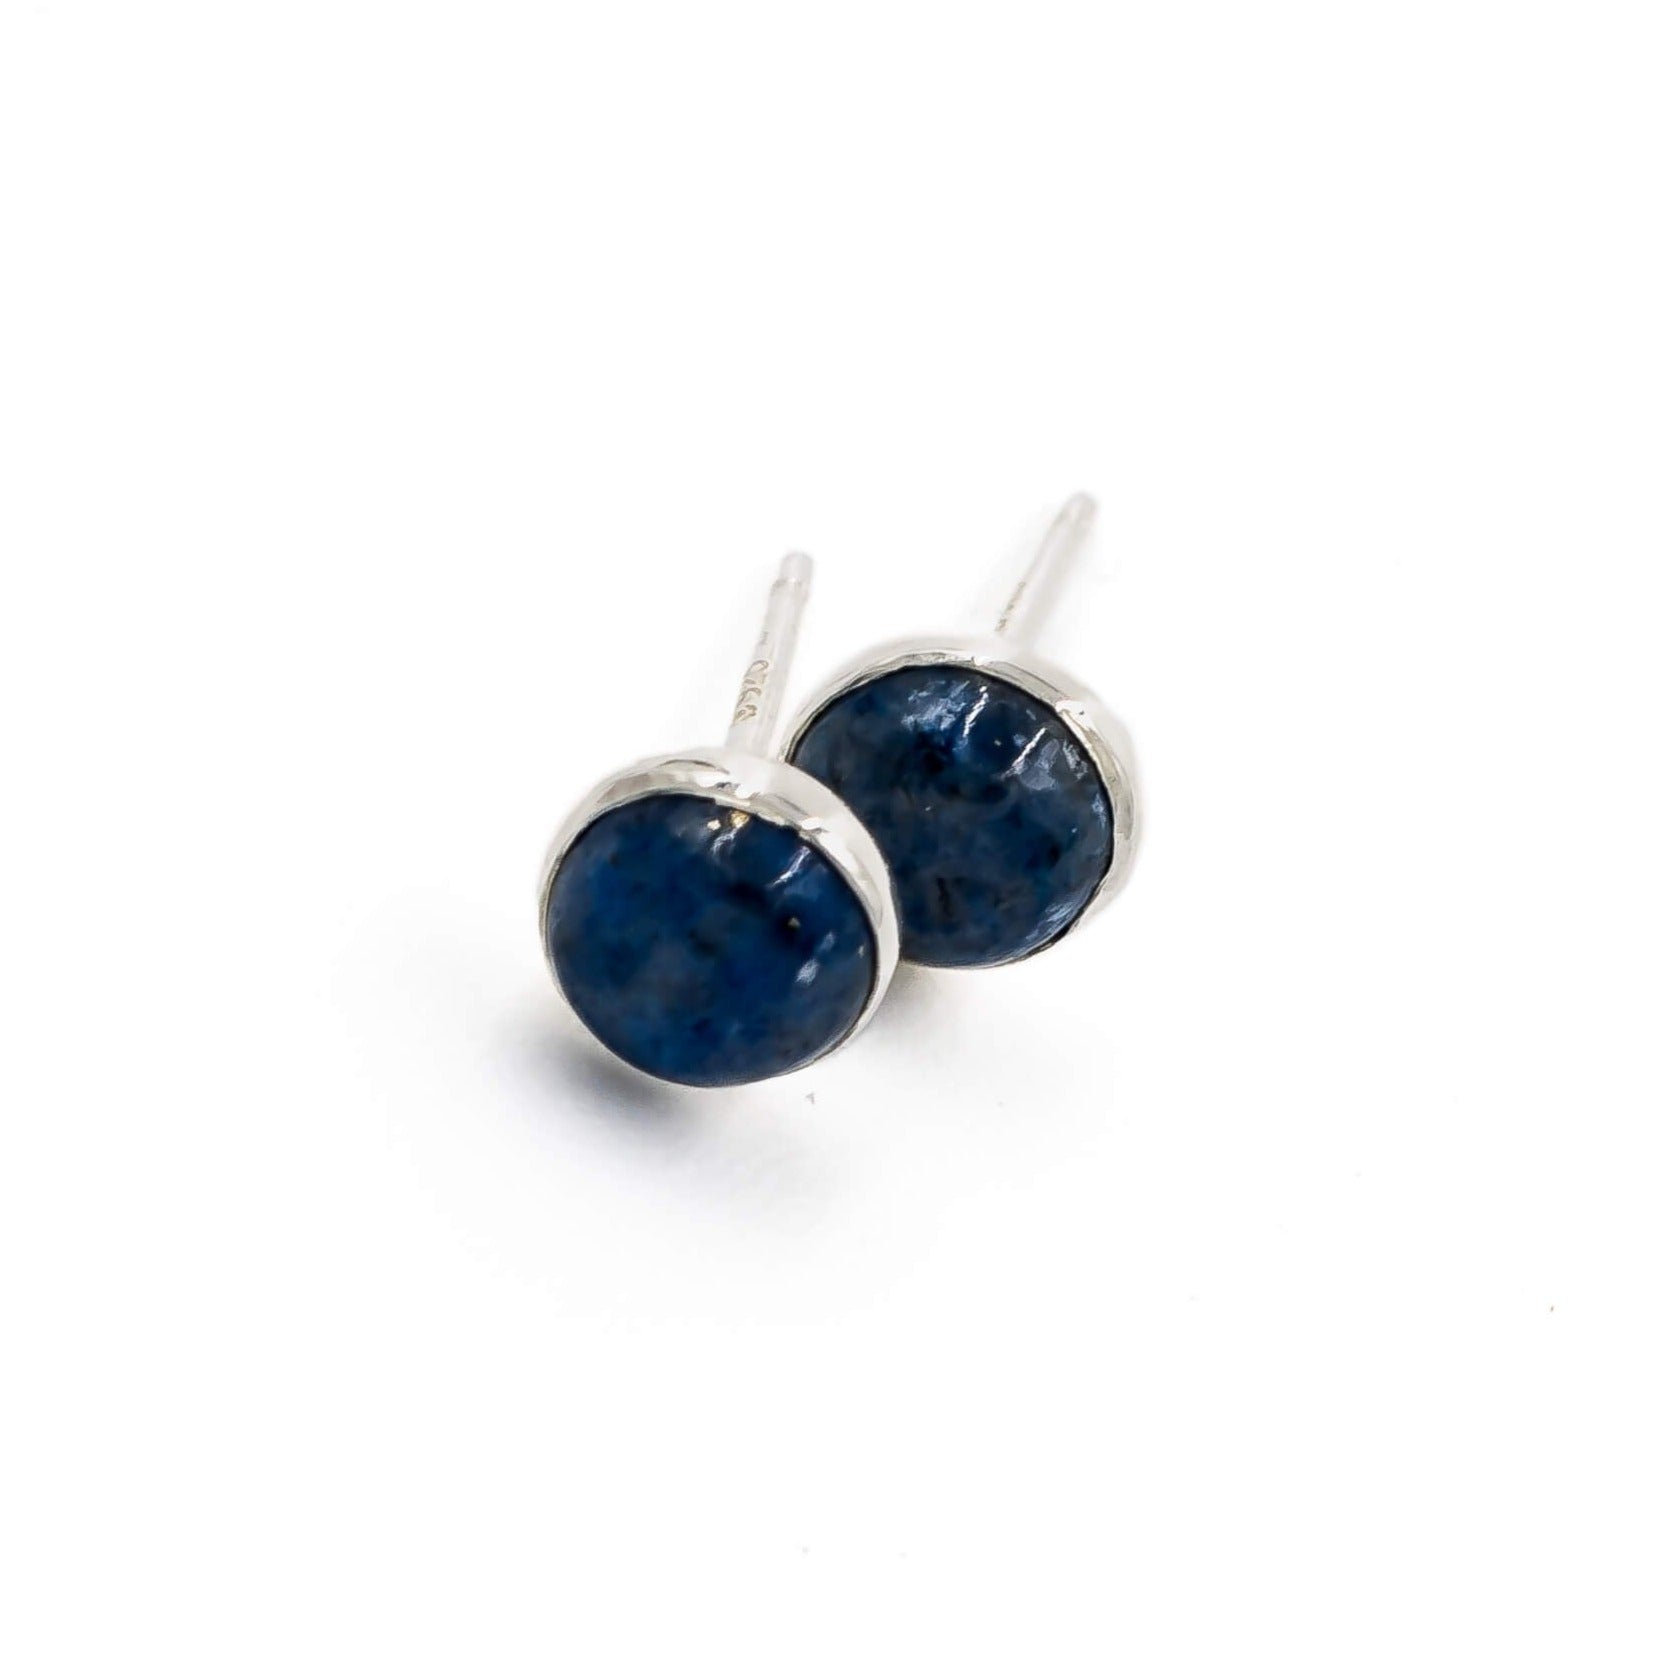 5mm denim lapis lazuli stud earrings in sterling silver